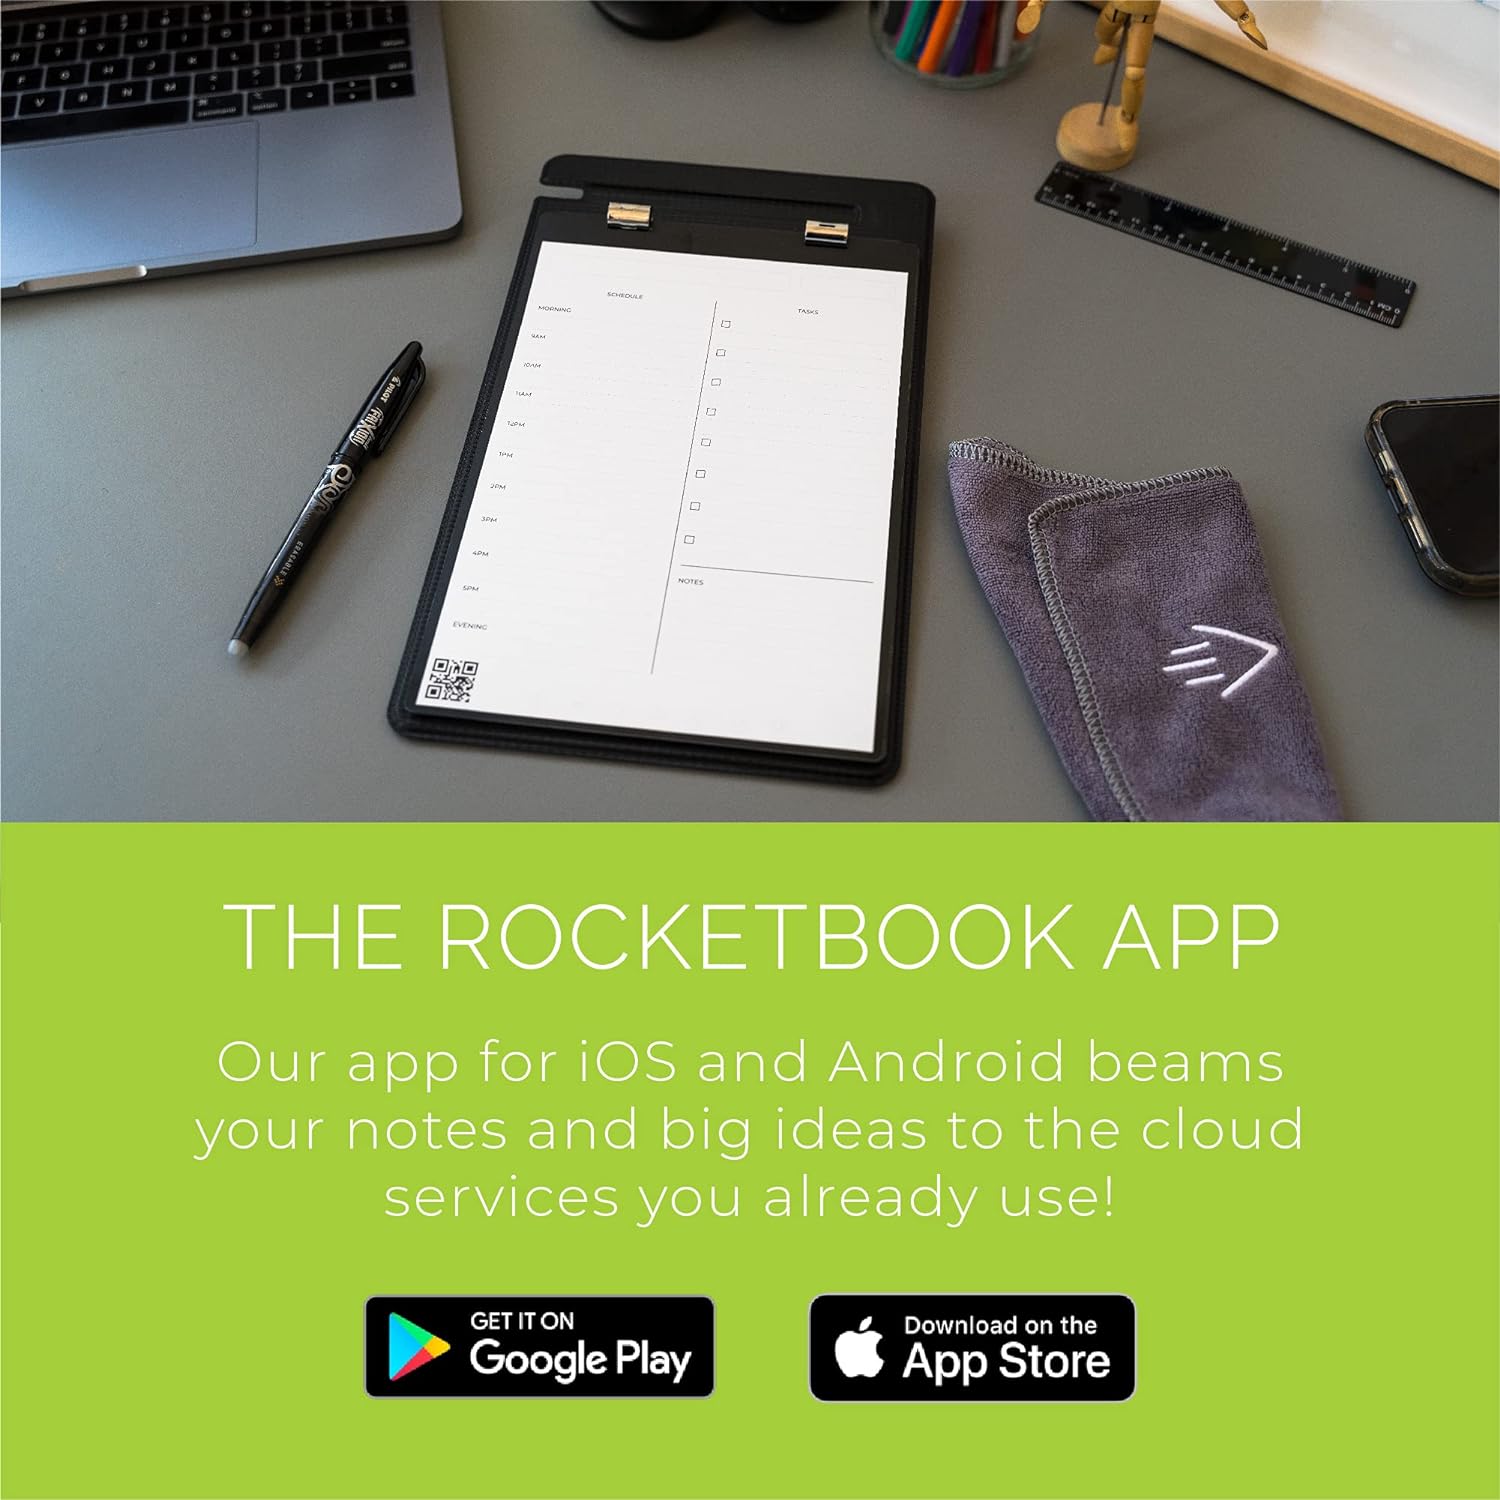 Rocketbook Orbit Legal Pad Letter - Smart Reusable Legal Pad - Gray, Lined\\/Dot-Grid